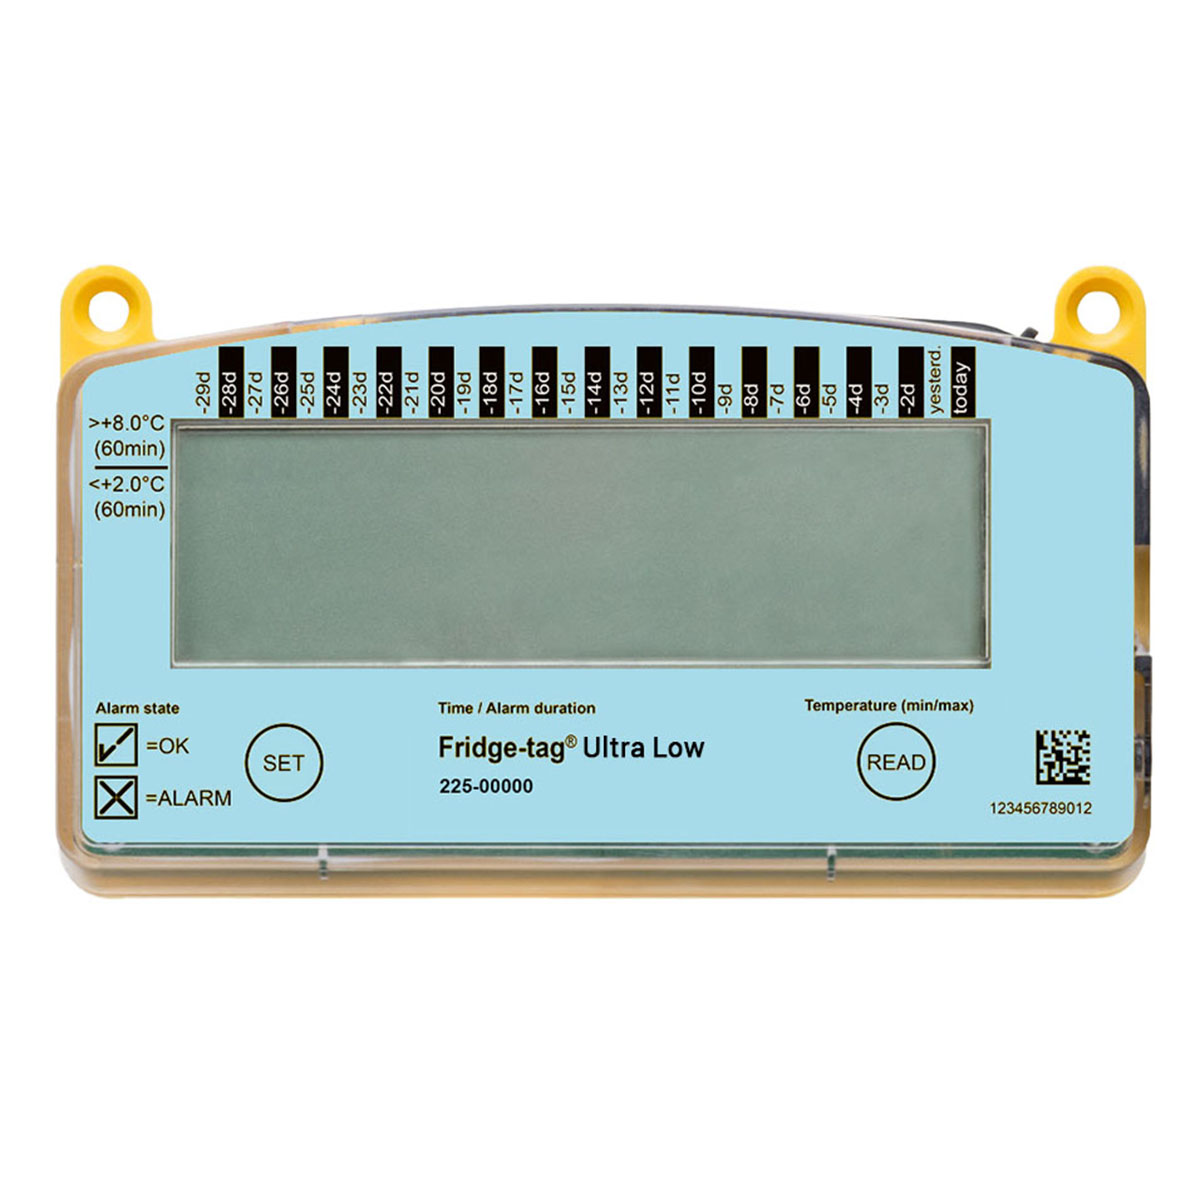 Fridge-tag® Ultra Low Data Logger images